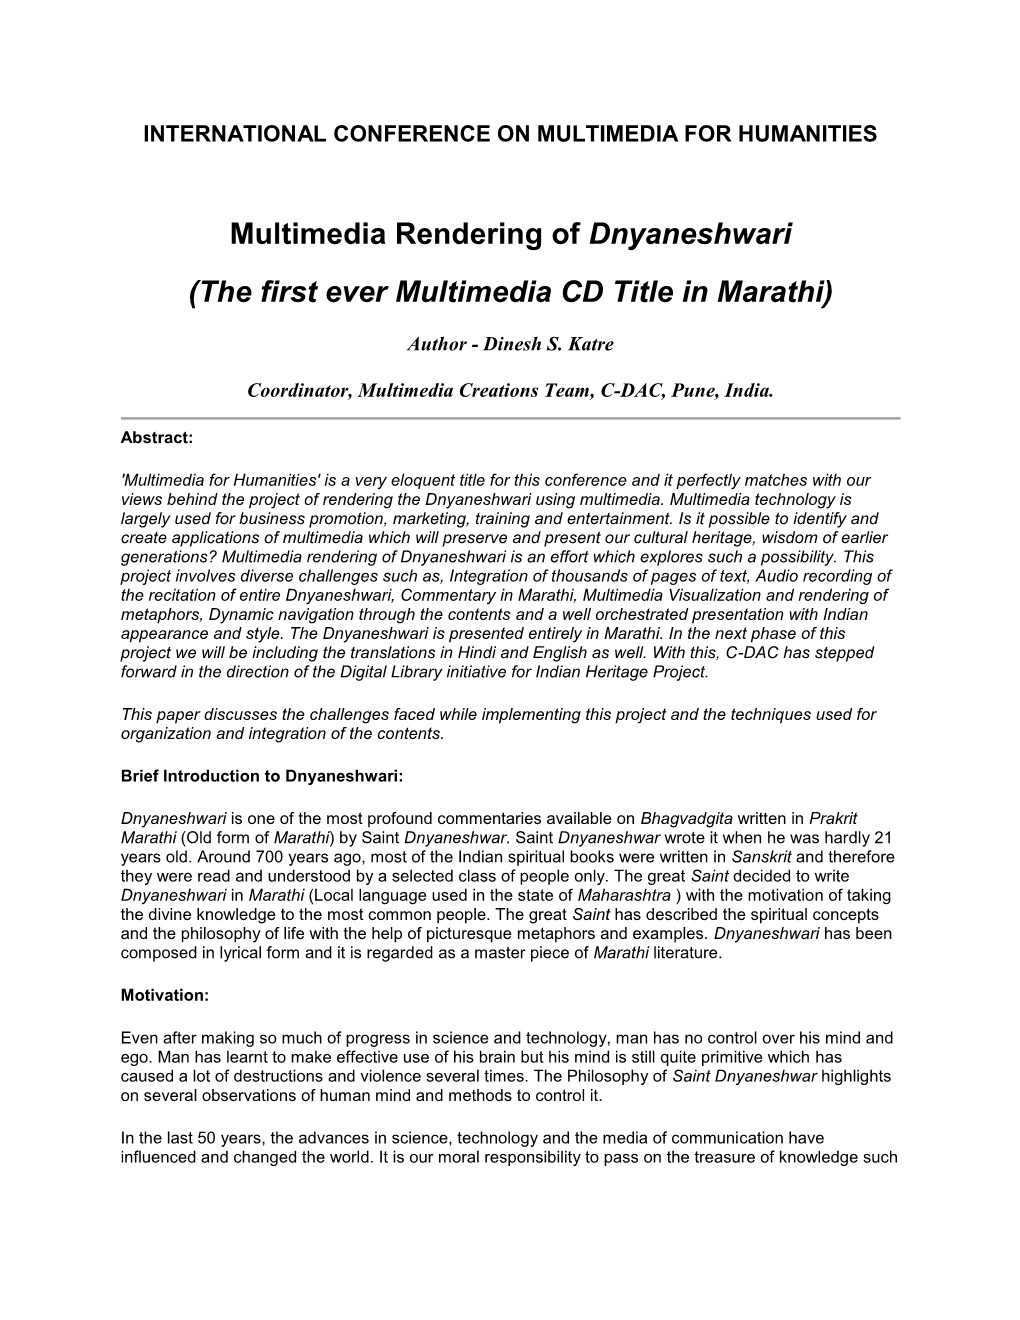 Multimedia Rendering of Dnyaneshwari (The First Ever